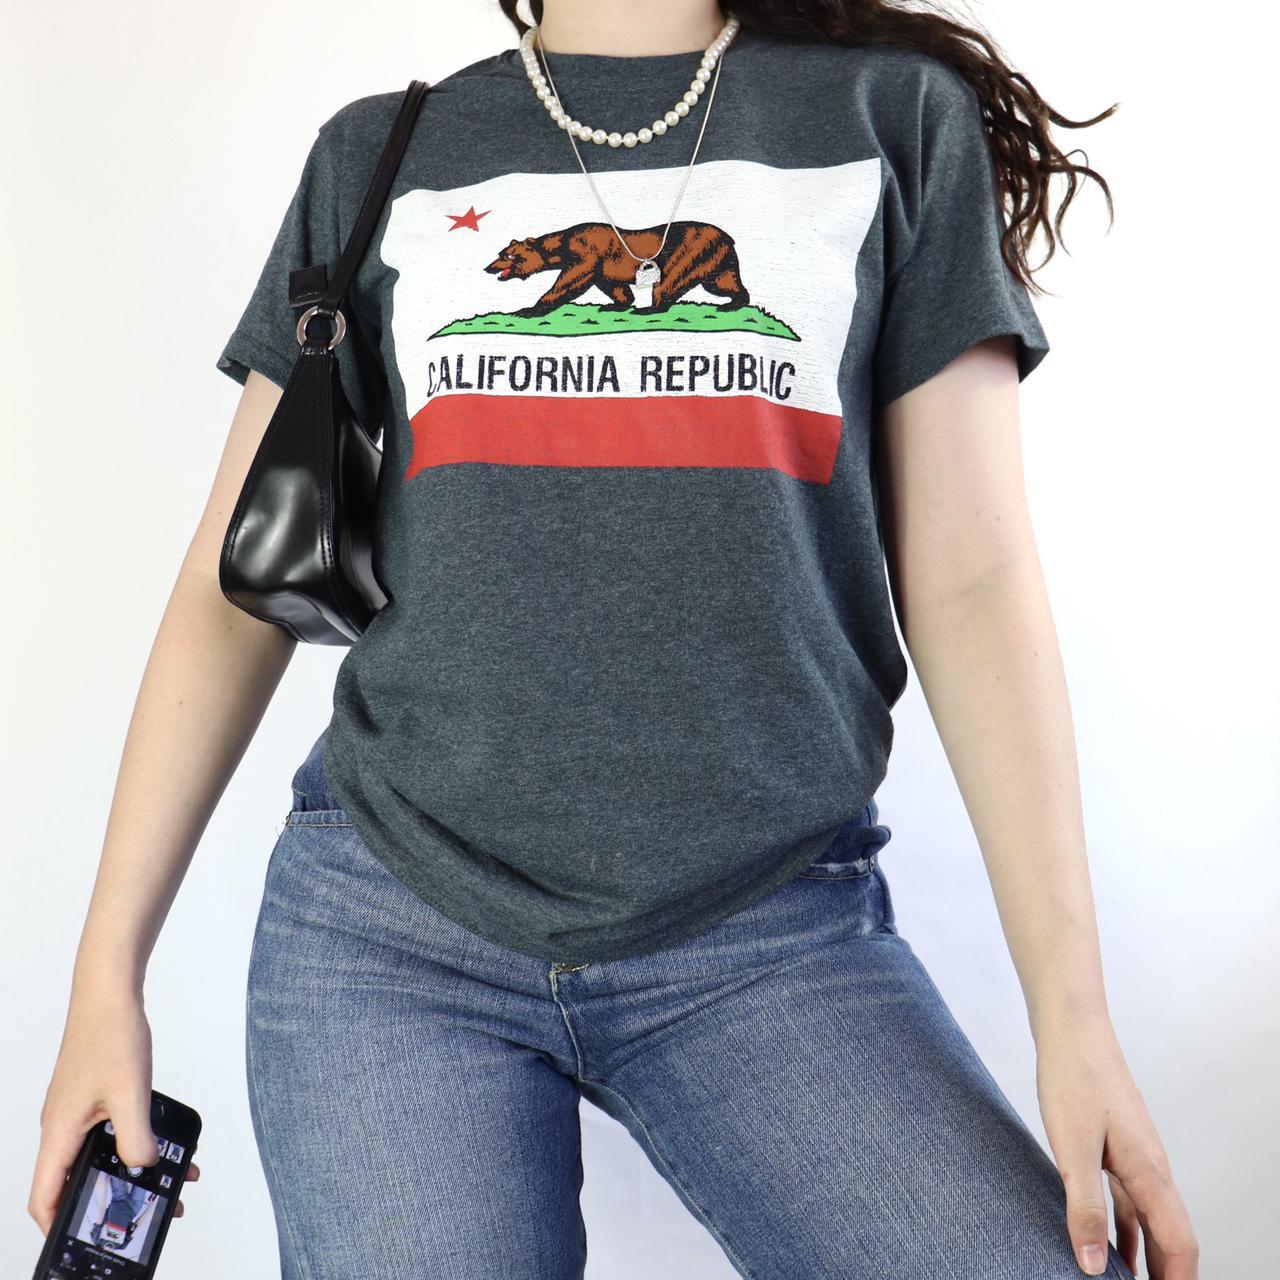 Product Image 2 - California Republic grey t-shirt 
In